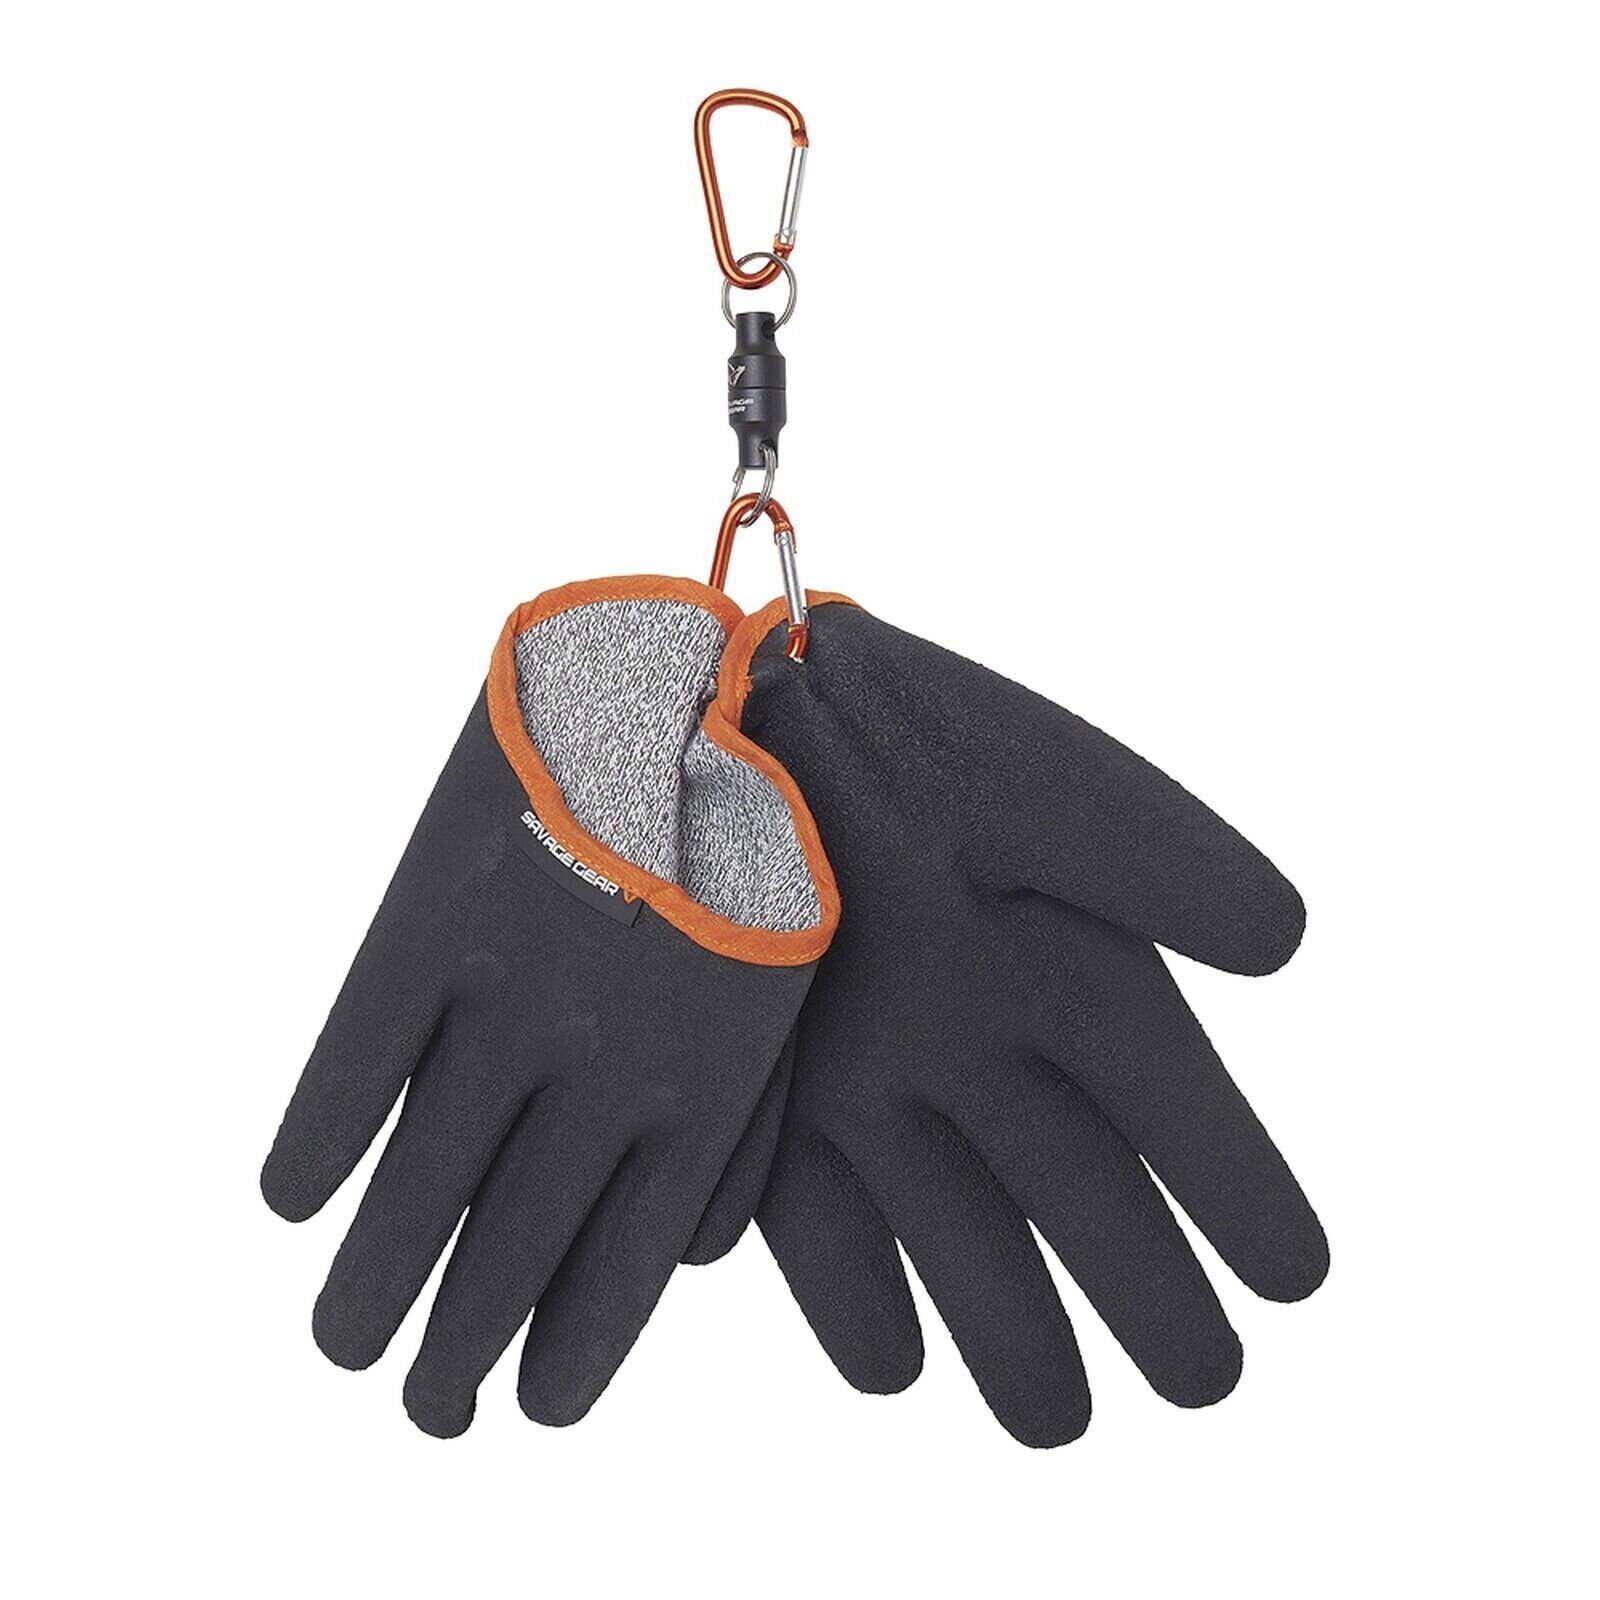 Angelhandschuhe Savage Black Gloves Guard L, XL Aqua Gear M, Landehandschuh Angler wasserdichter